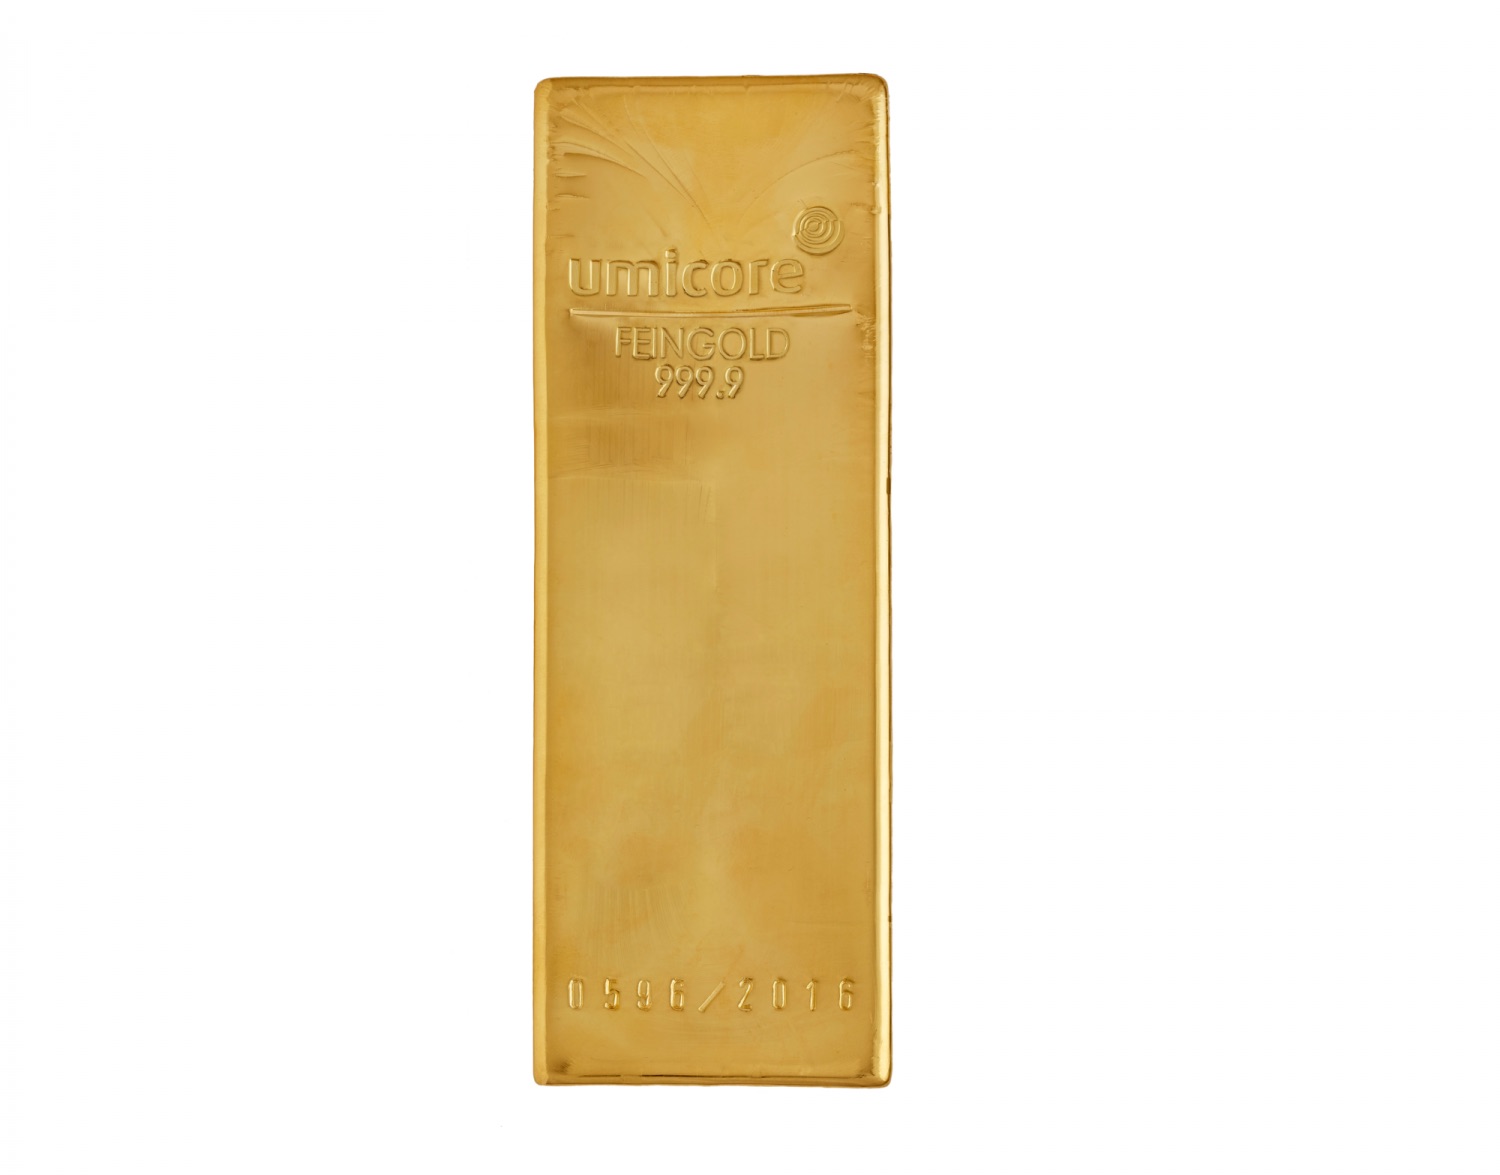 Psychiatrie gevolg presentatie Umicore 12.5 (400 oz) kilo goudbaar kopen - Aullure